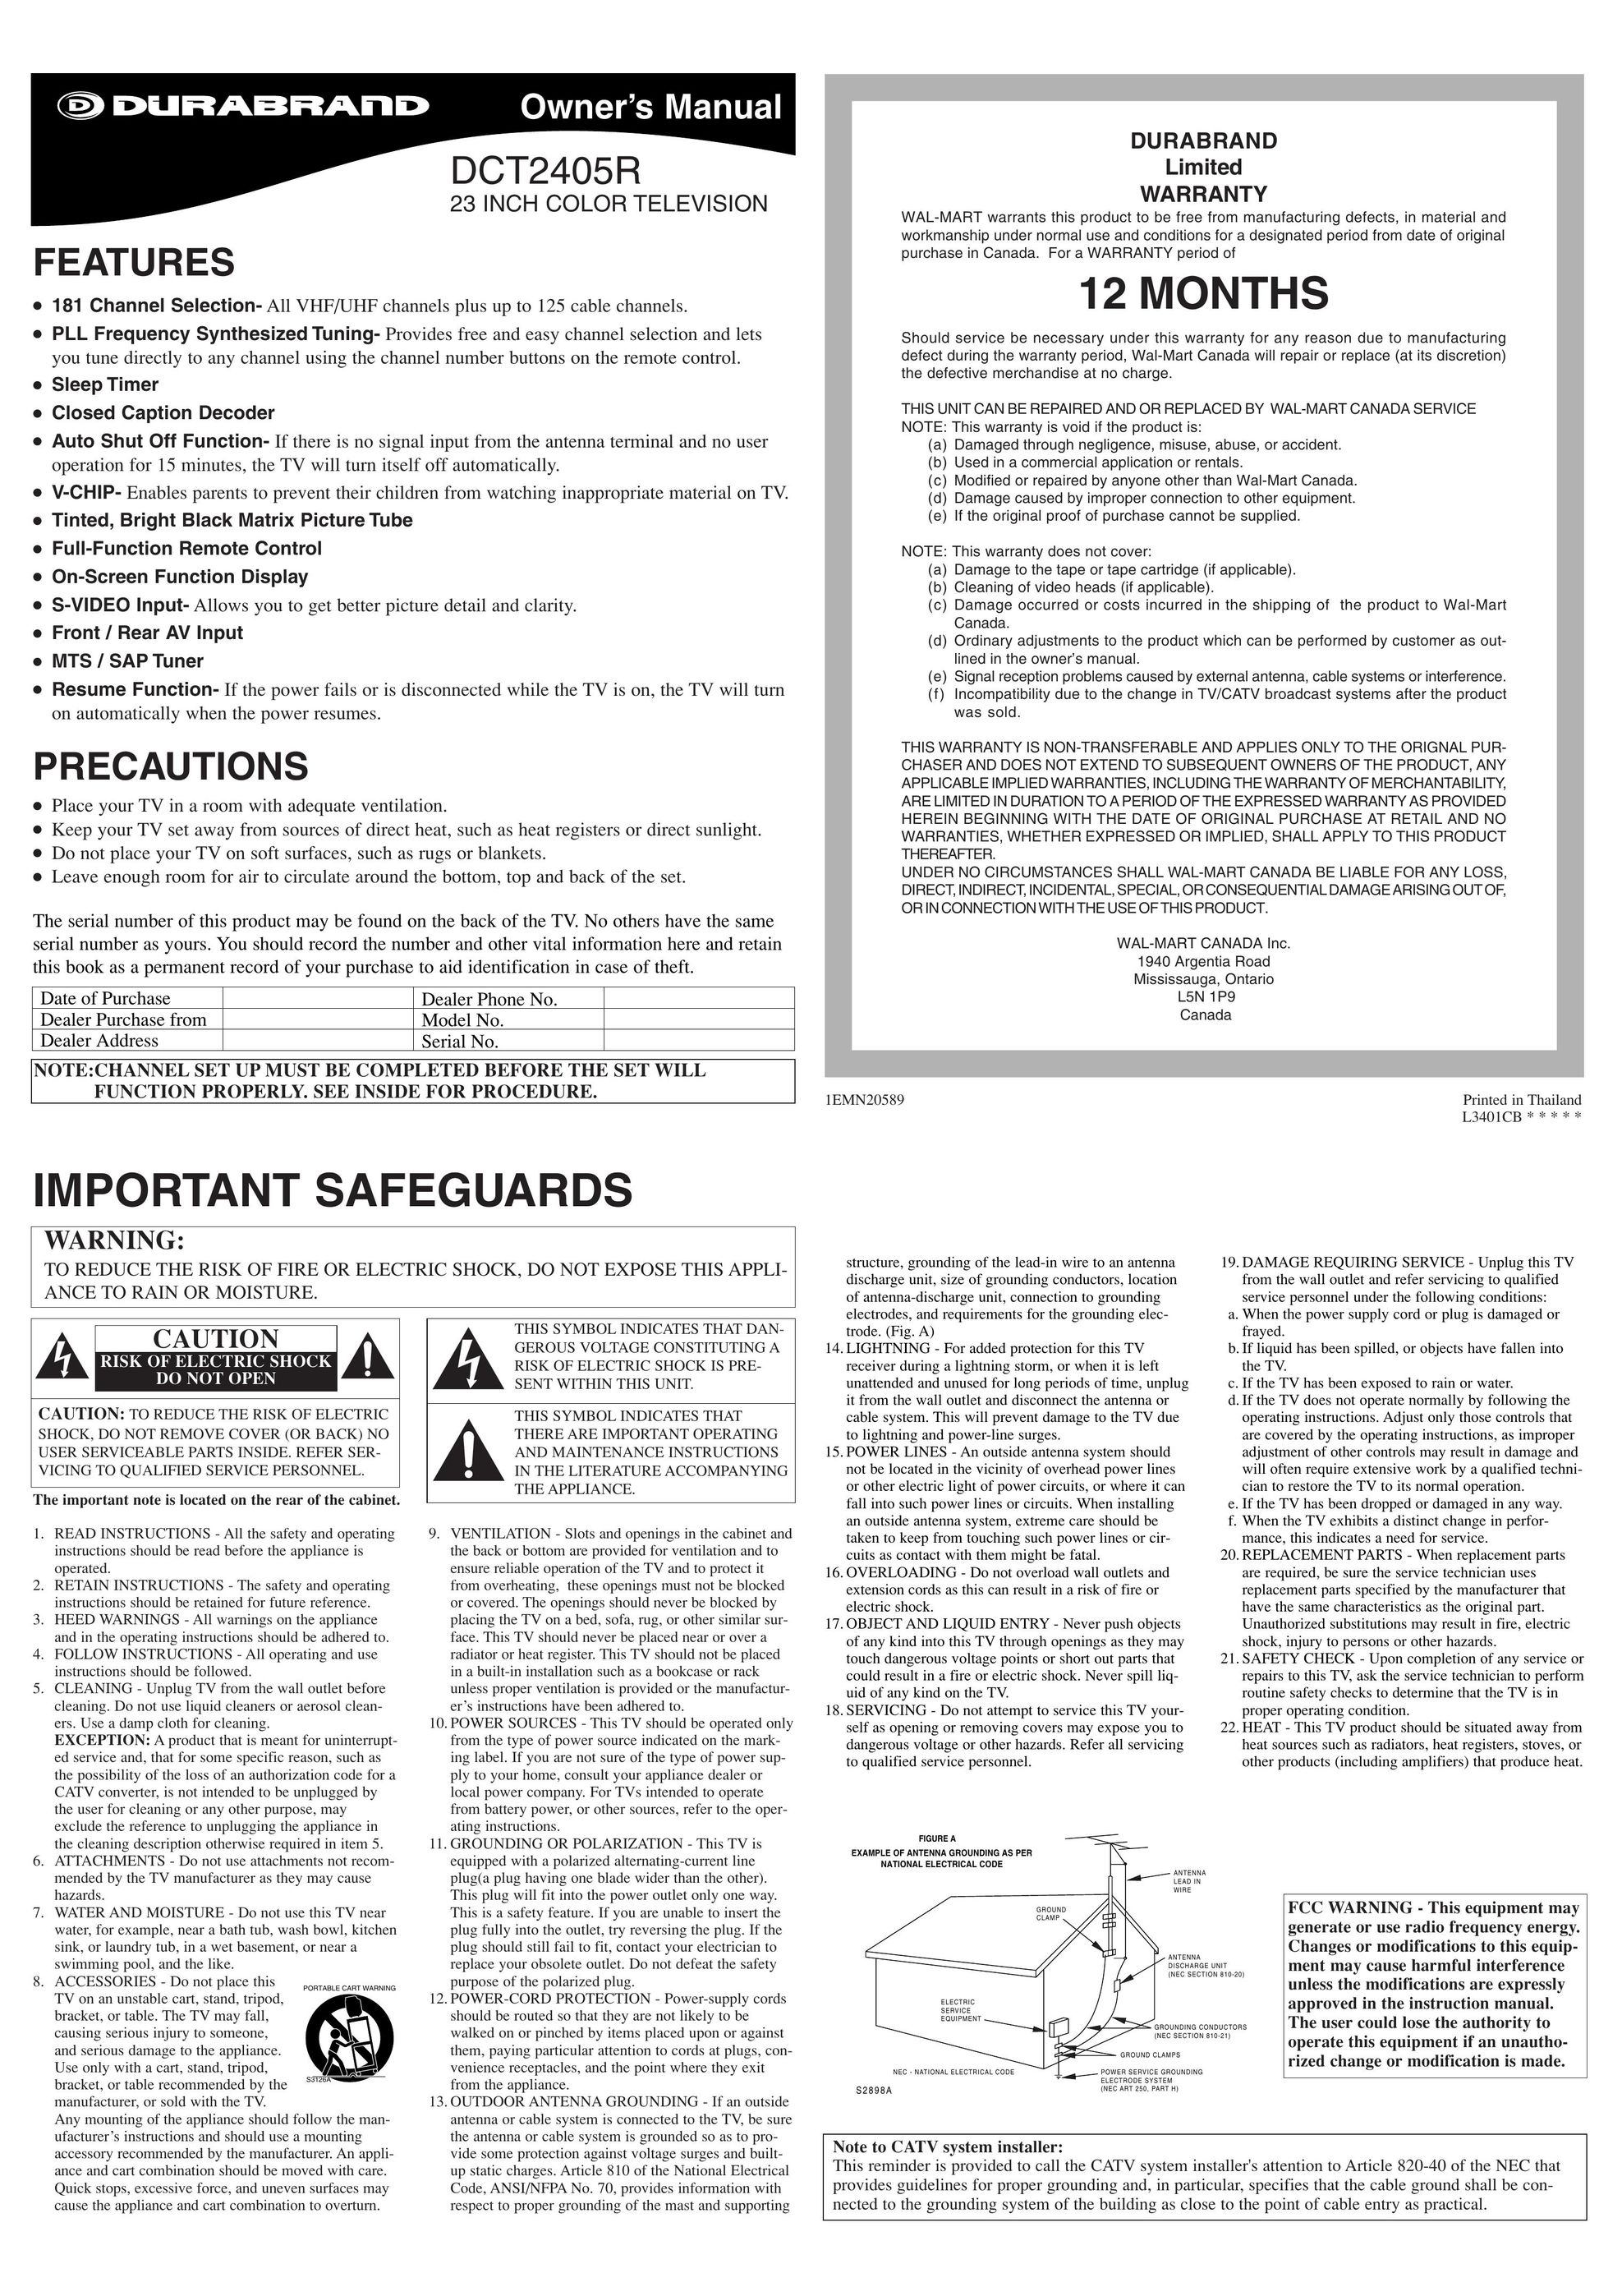 Durabrand DCT2405R CRT Television User Manual